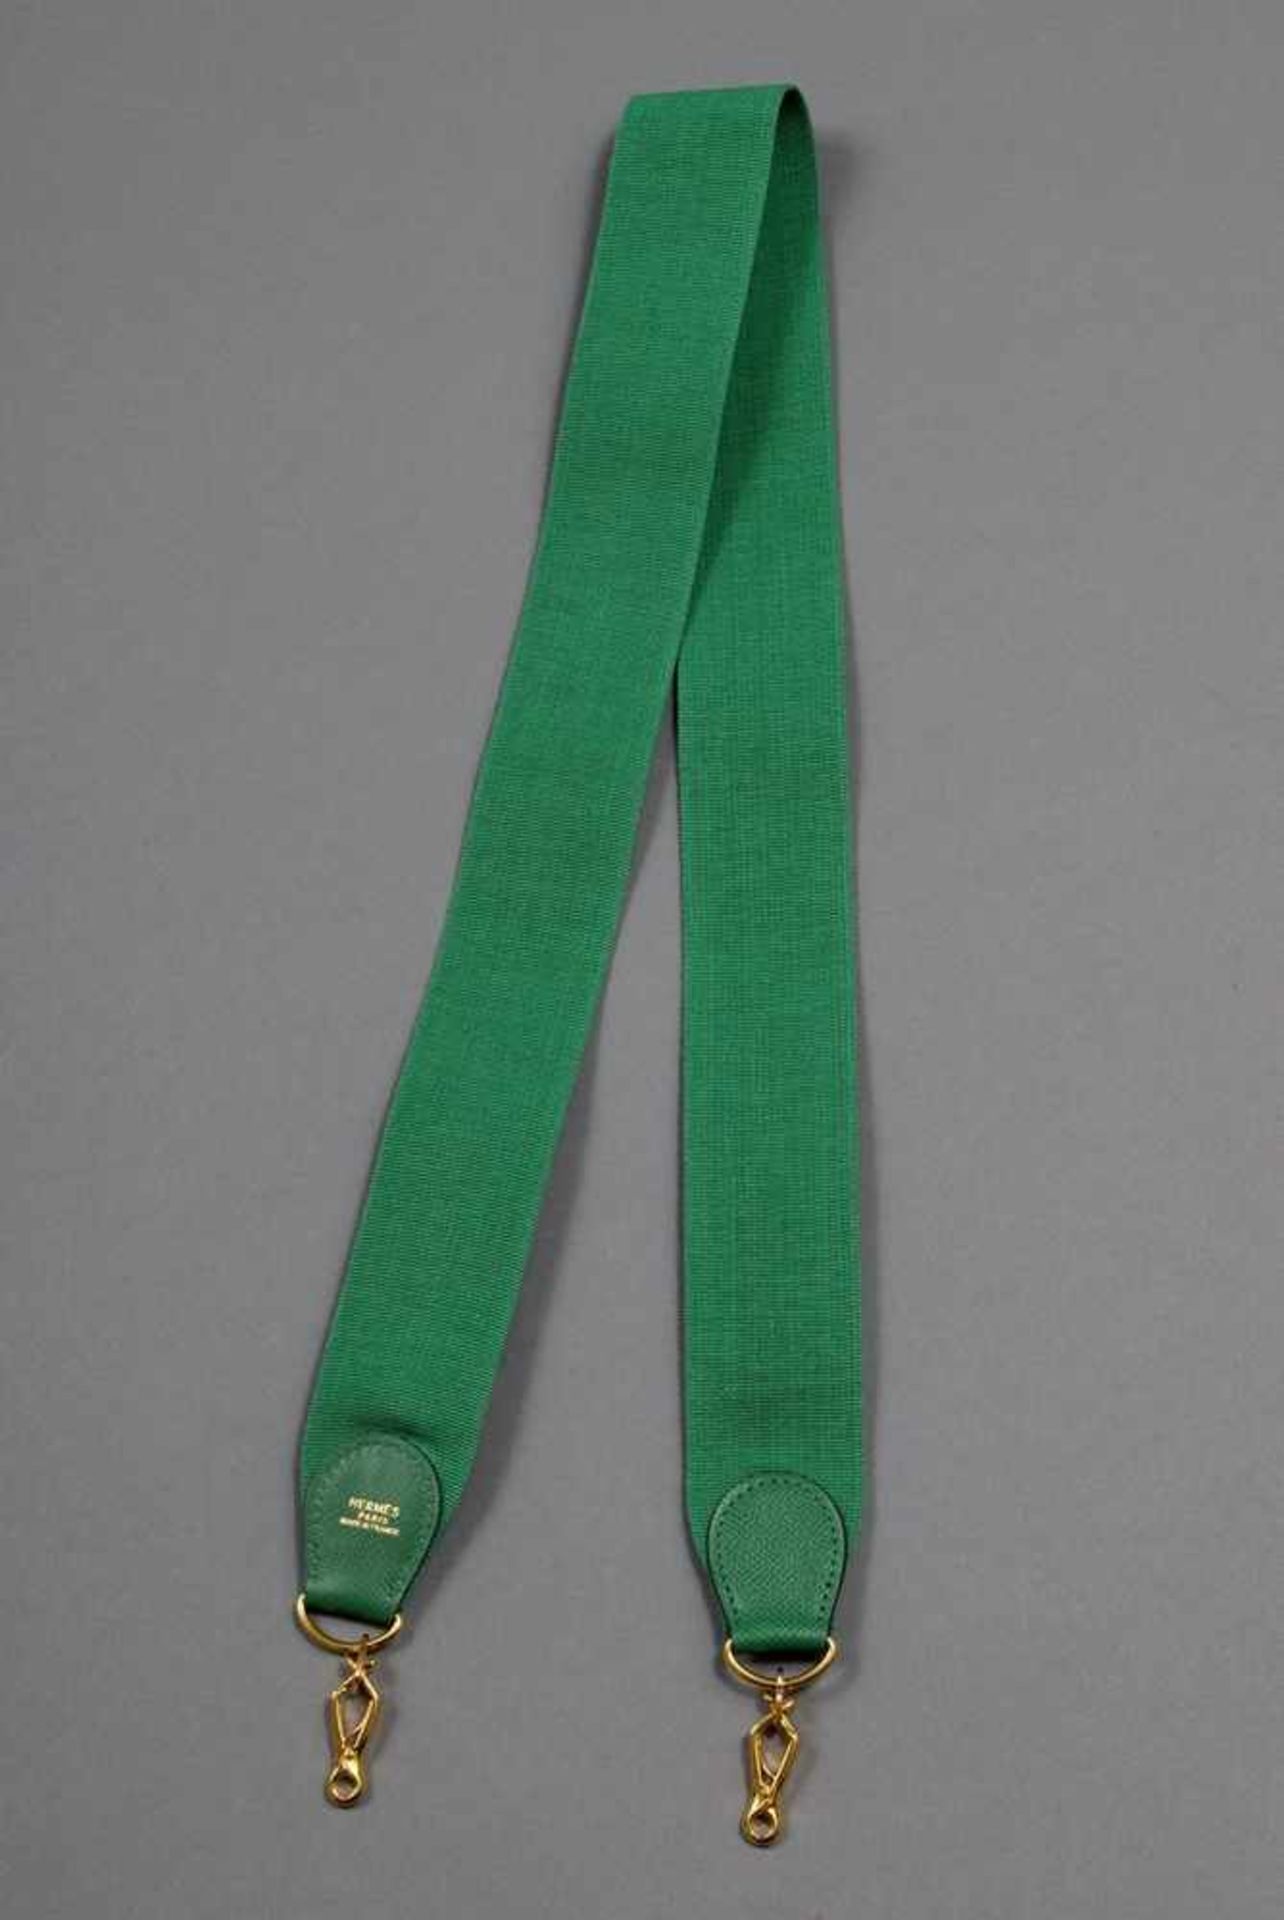 Hermès Sangle, green, cotton/leather/gold plated metal, l. 109cm, wornHermès Sangle, grün, - Bild 2 aus 2